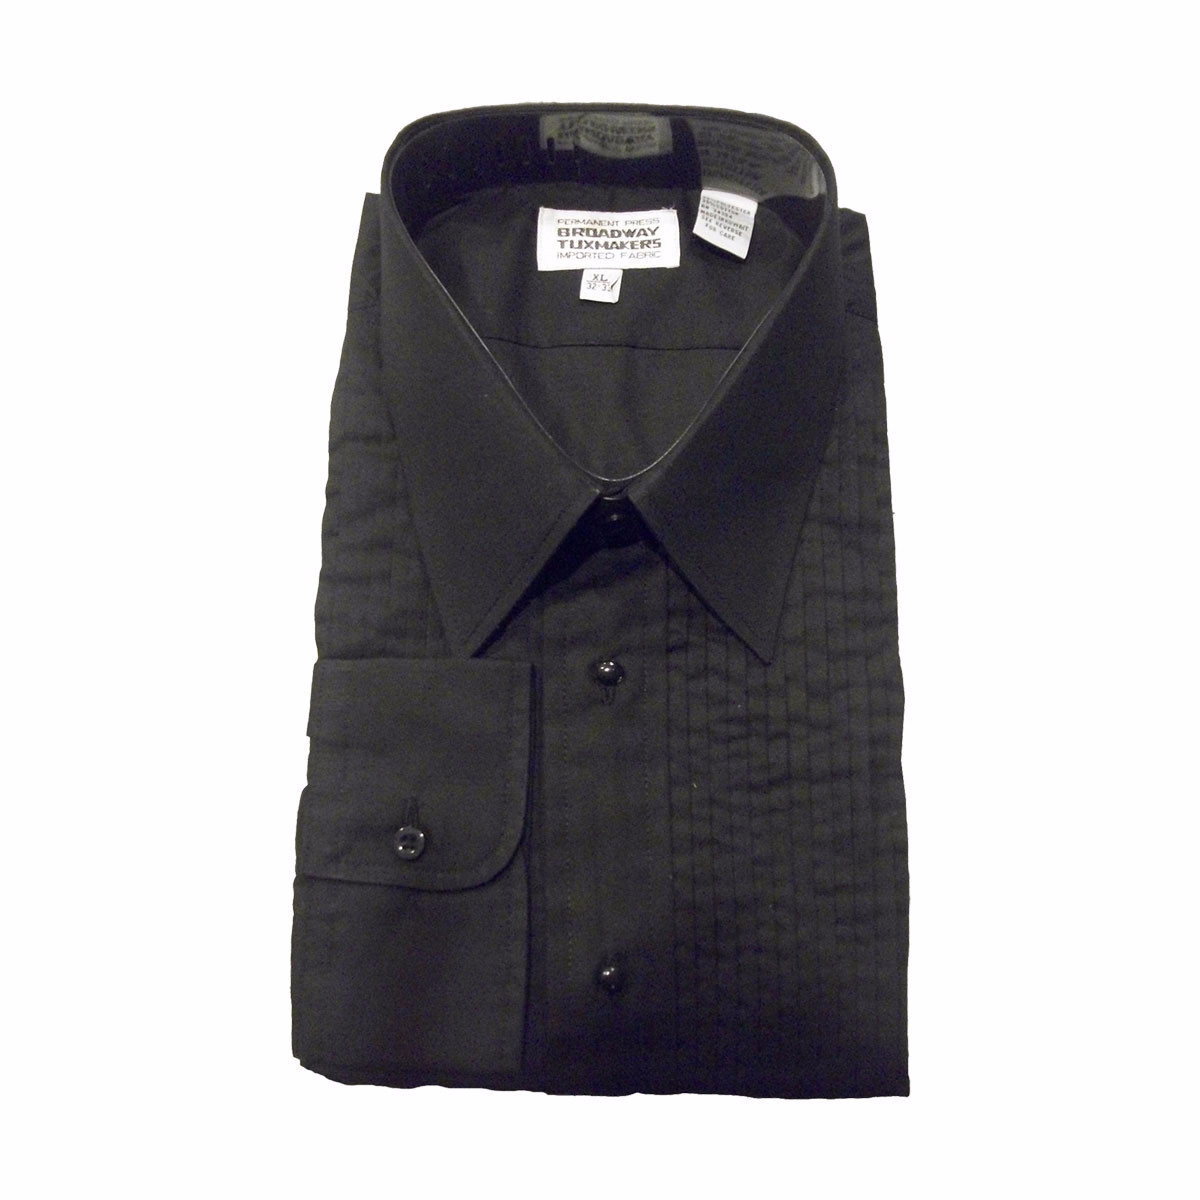 Men's Black Tuxedo Shirt, Lay Down Collar & 1/4" Pleats